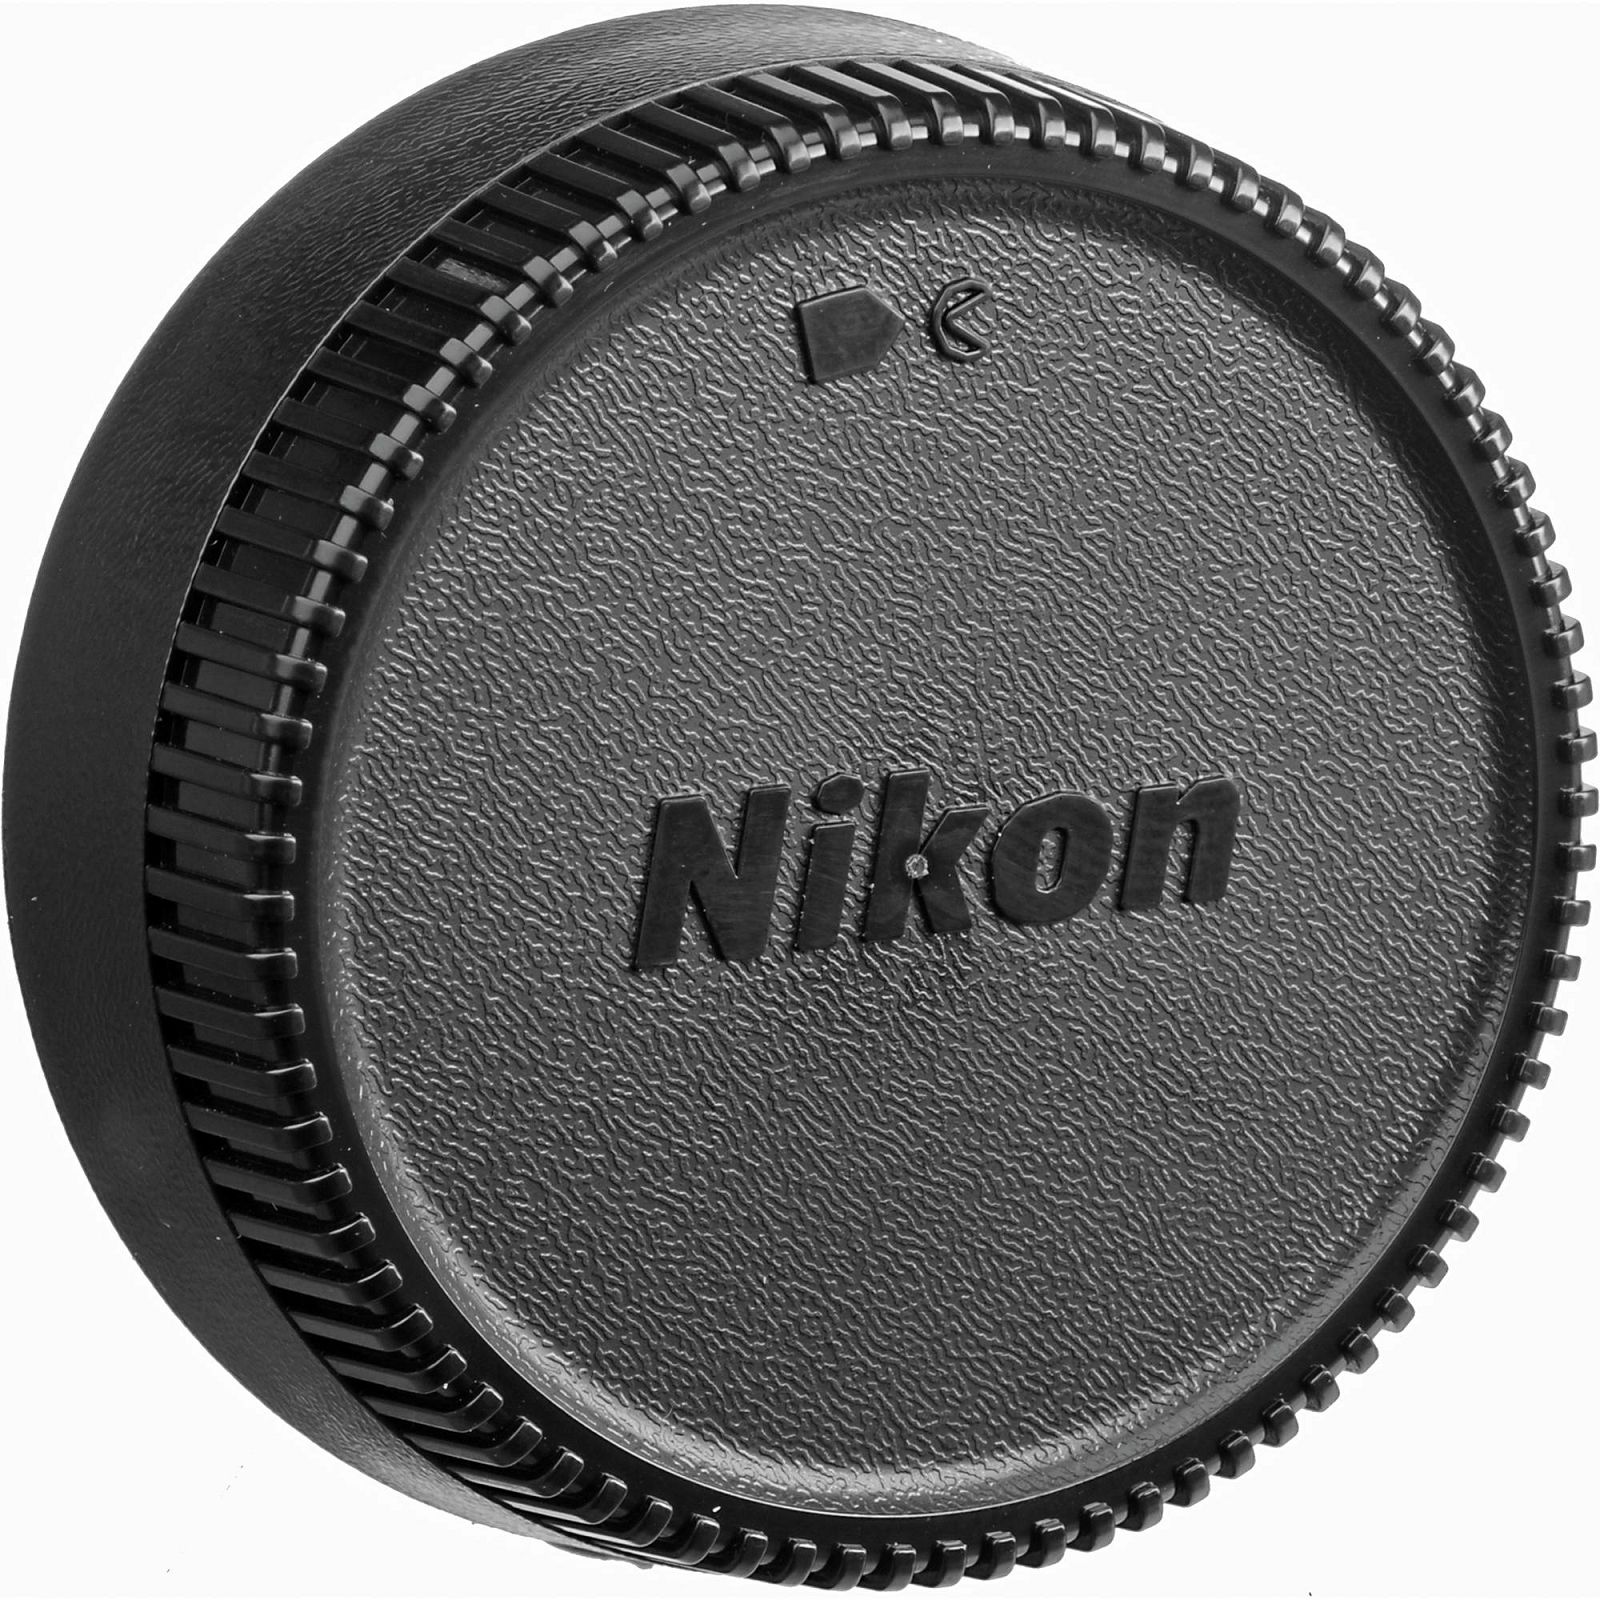 Nikon AF-S 12-24mm f/4G IF-ED DX ultra širokokutni objektiv Nikkor 12-24 f/4 G F4G wide zoom lens auto focus (JAA784DA)